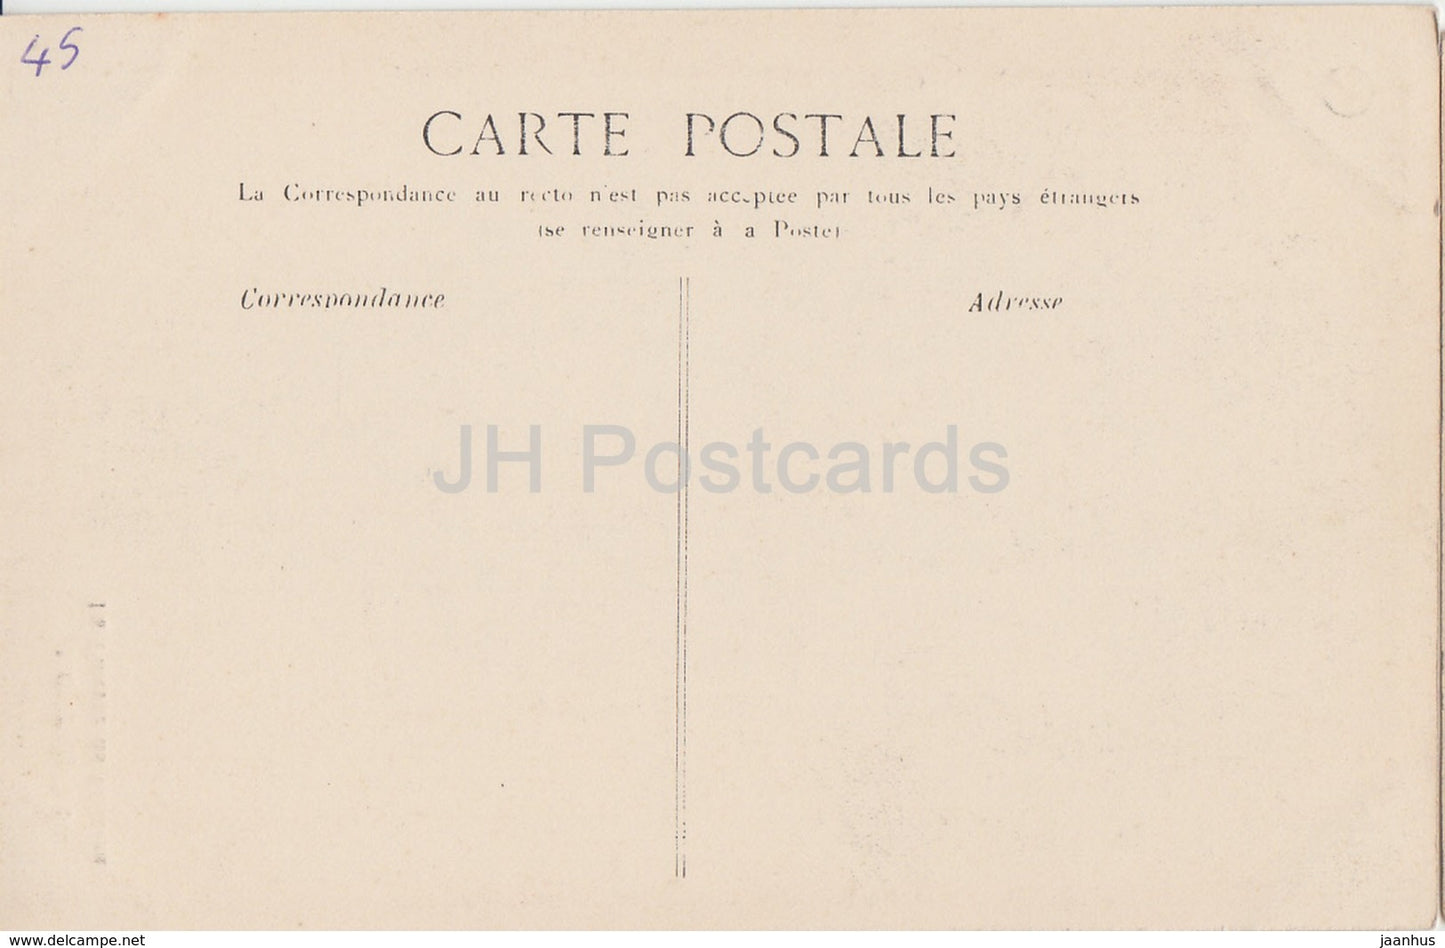 Montargis - La Poterne du Chateau - Schloss - alte Postkarte - Frankreich - unbenutzt